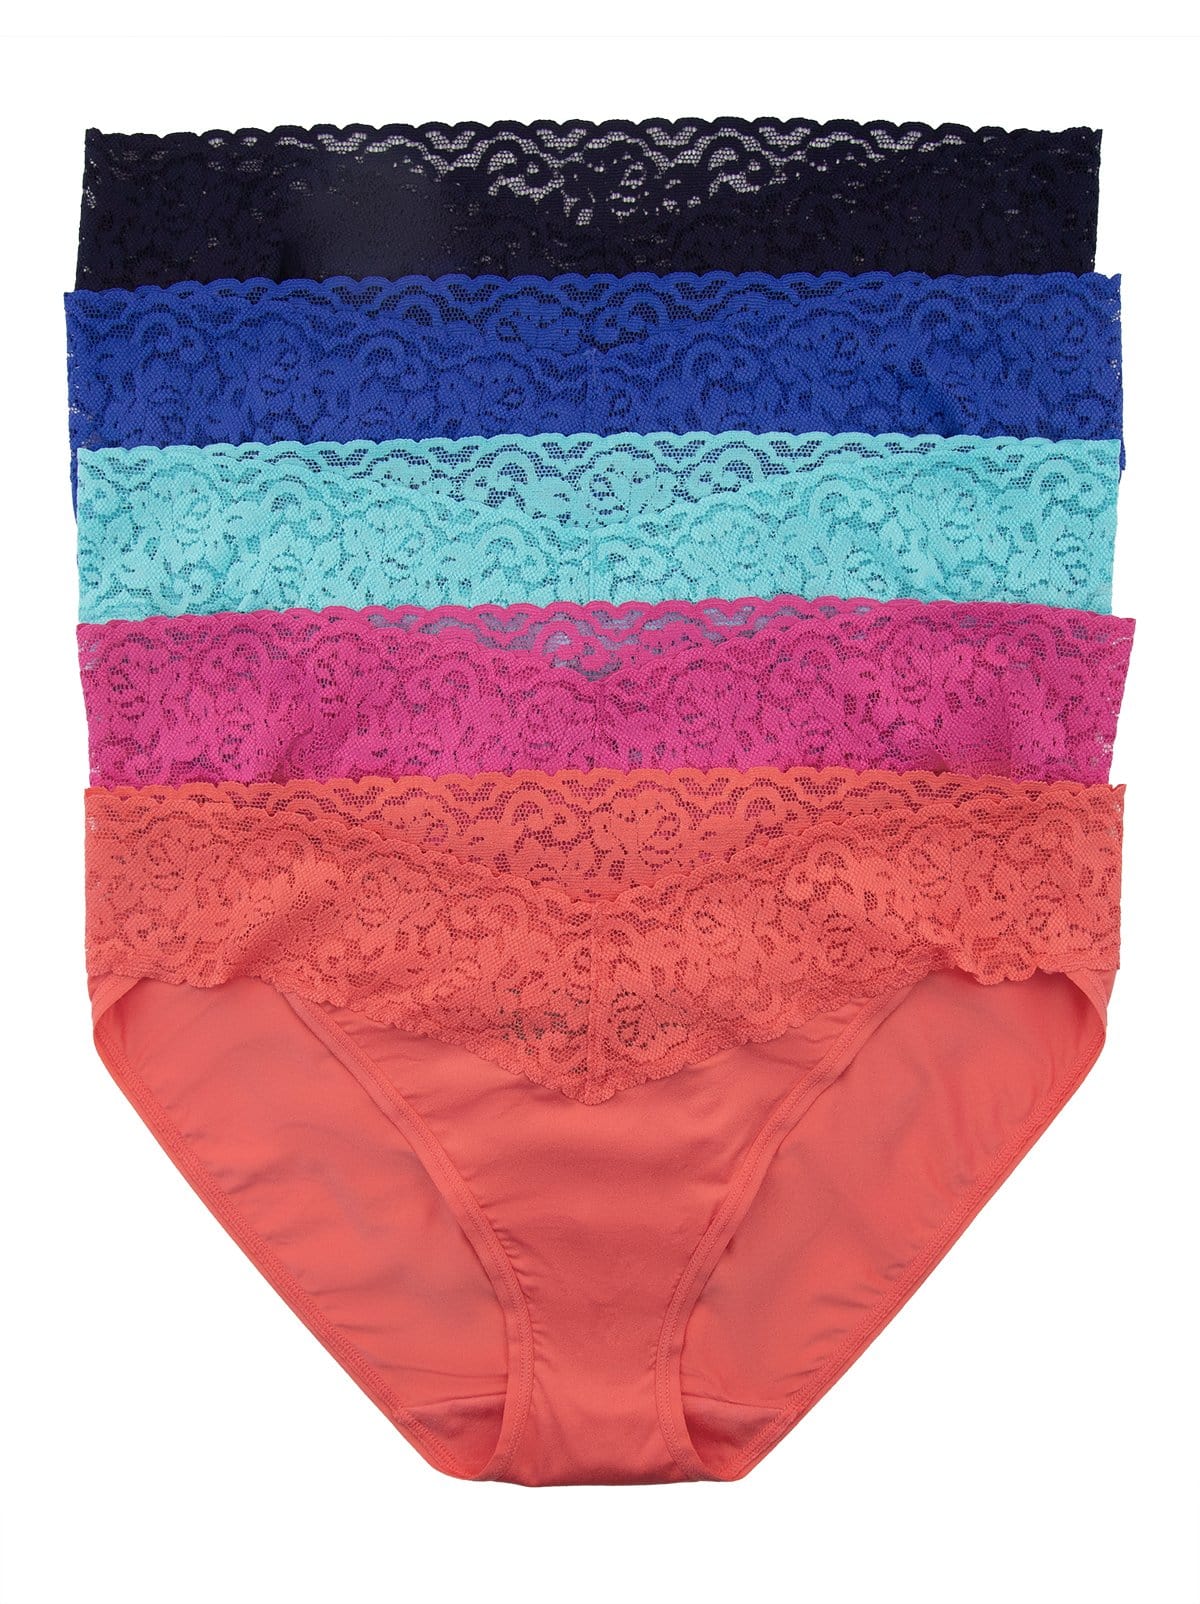 Felina Signature Stretch Lace Top Women's Bikini Underwear 5-Pack